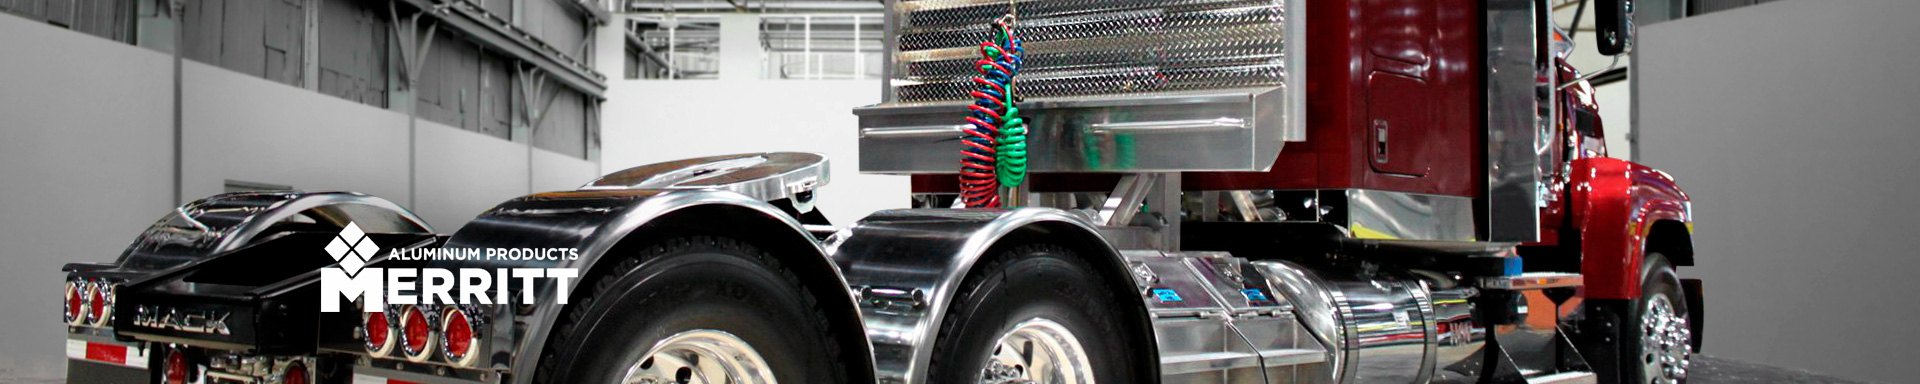 Merritt Aluminum Cab Racks & Chain Hangers